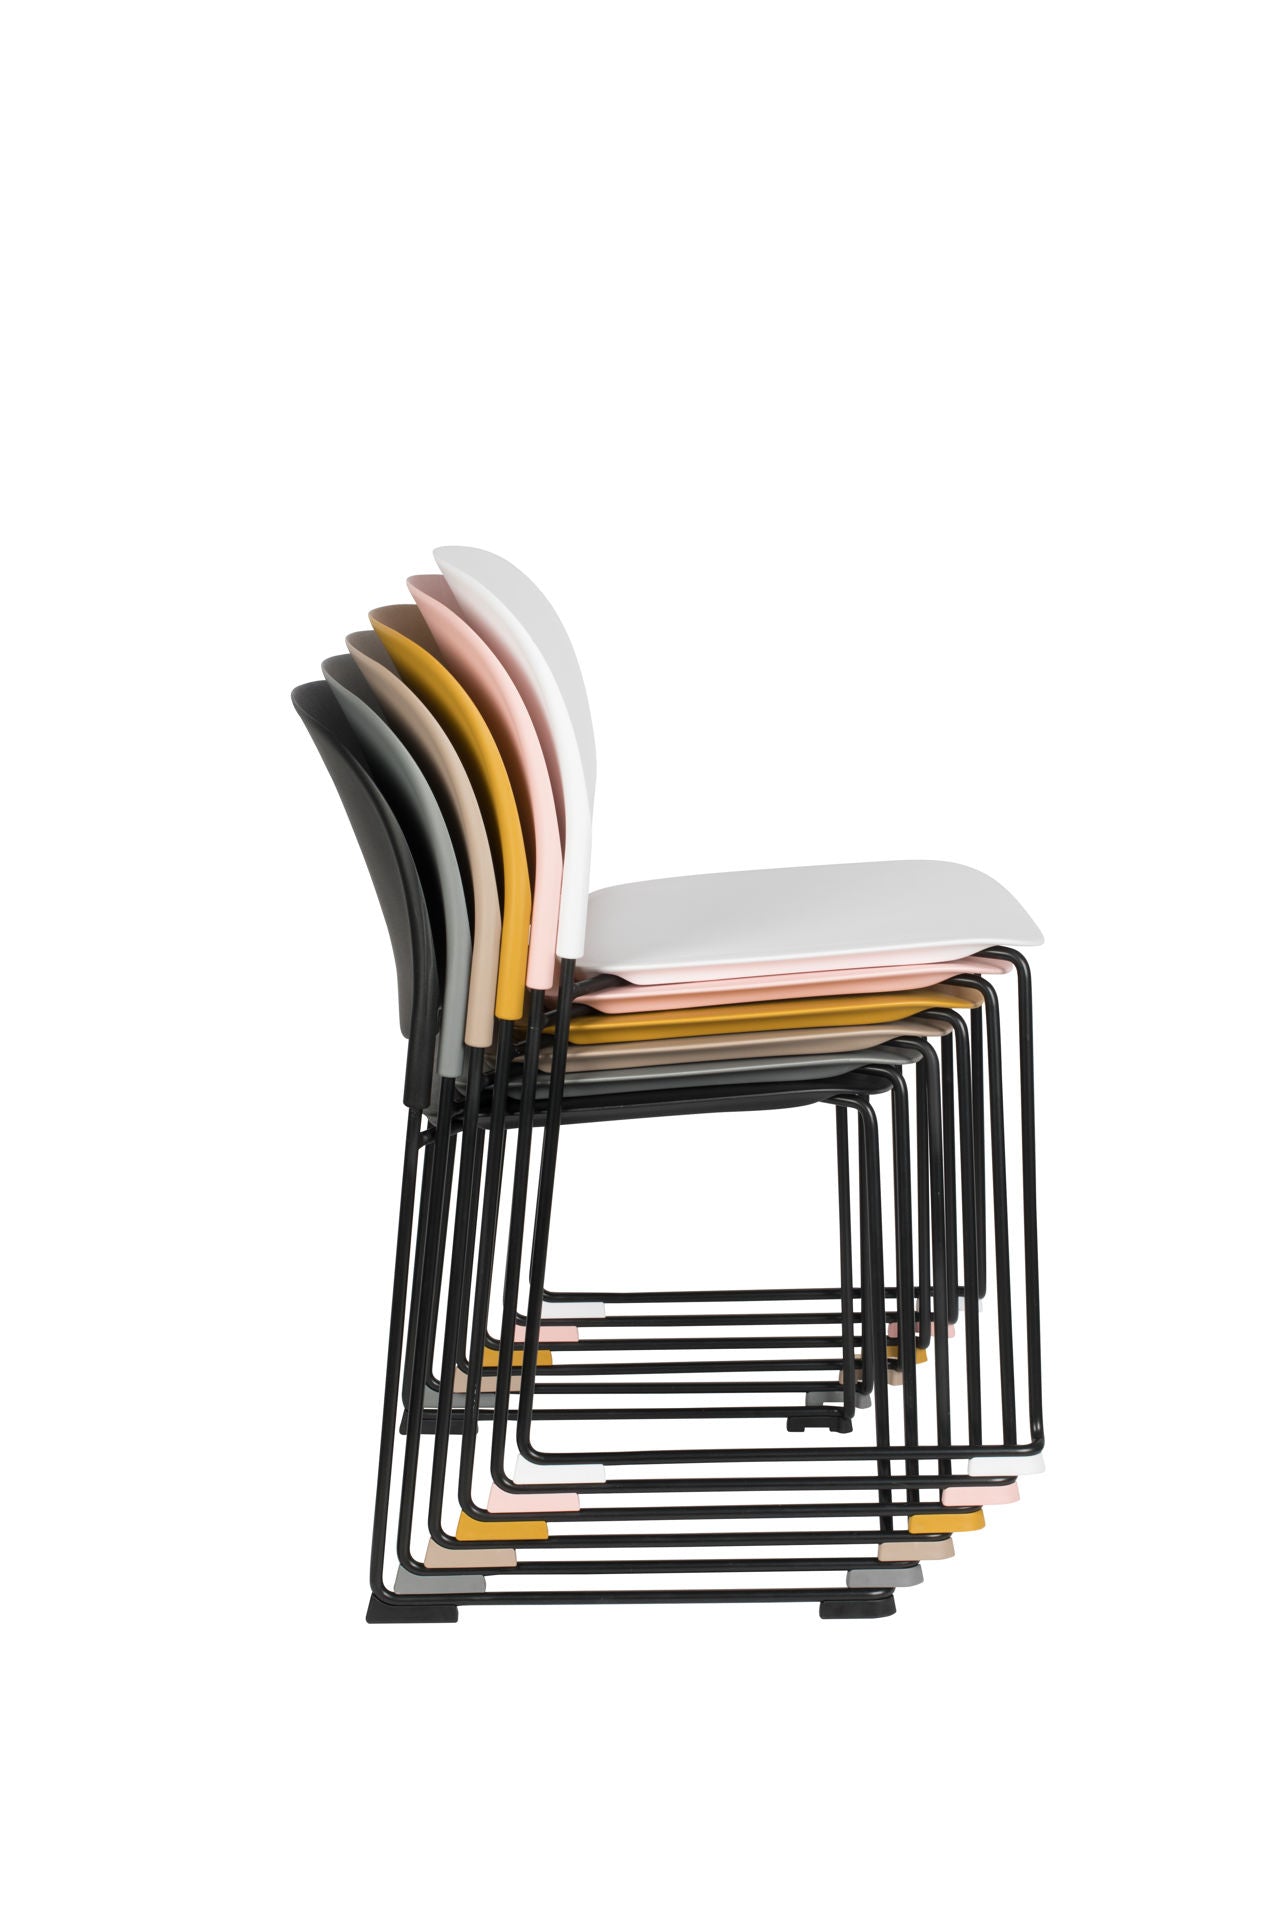 Nancy's Prairie du Sac Chair - Retro - Gray, Black - Polypropylene, Steel, Plastic - 52.5 cm x 48.5 cm x 80 cm